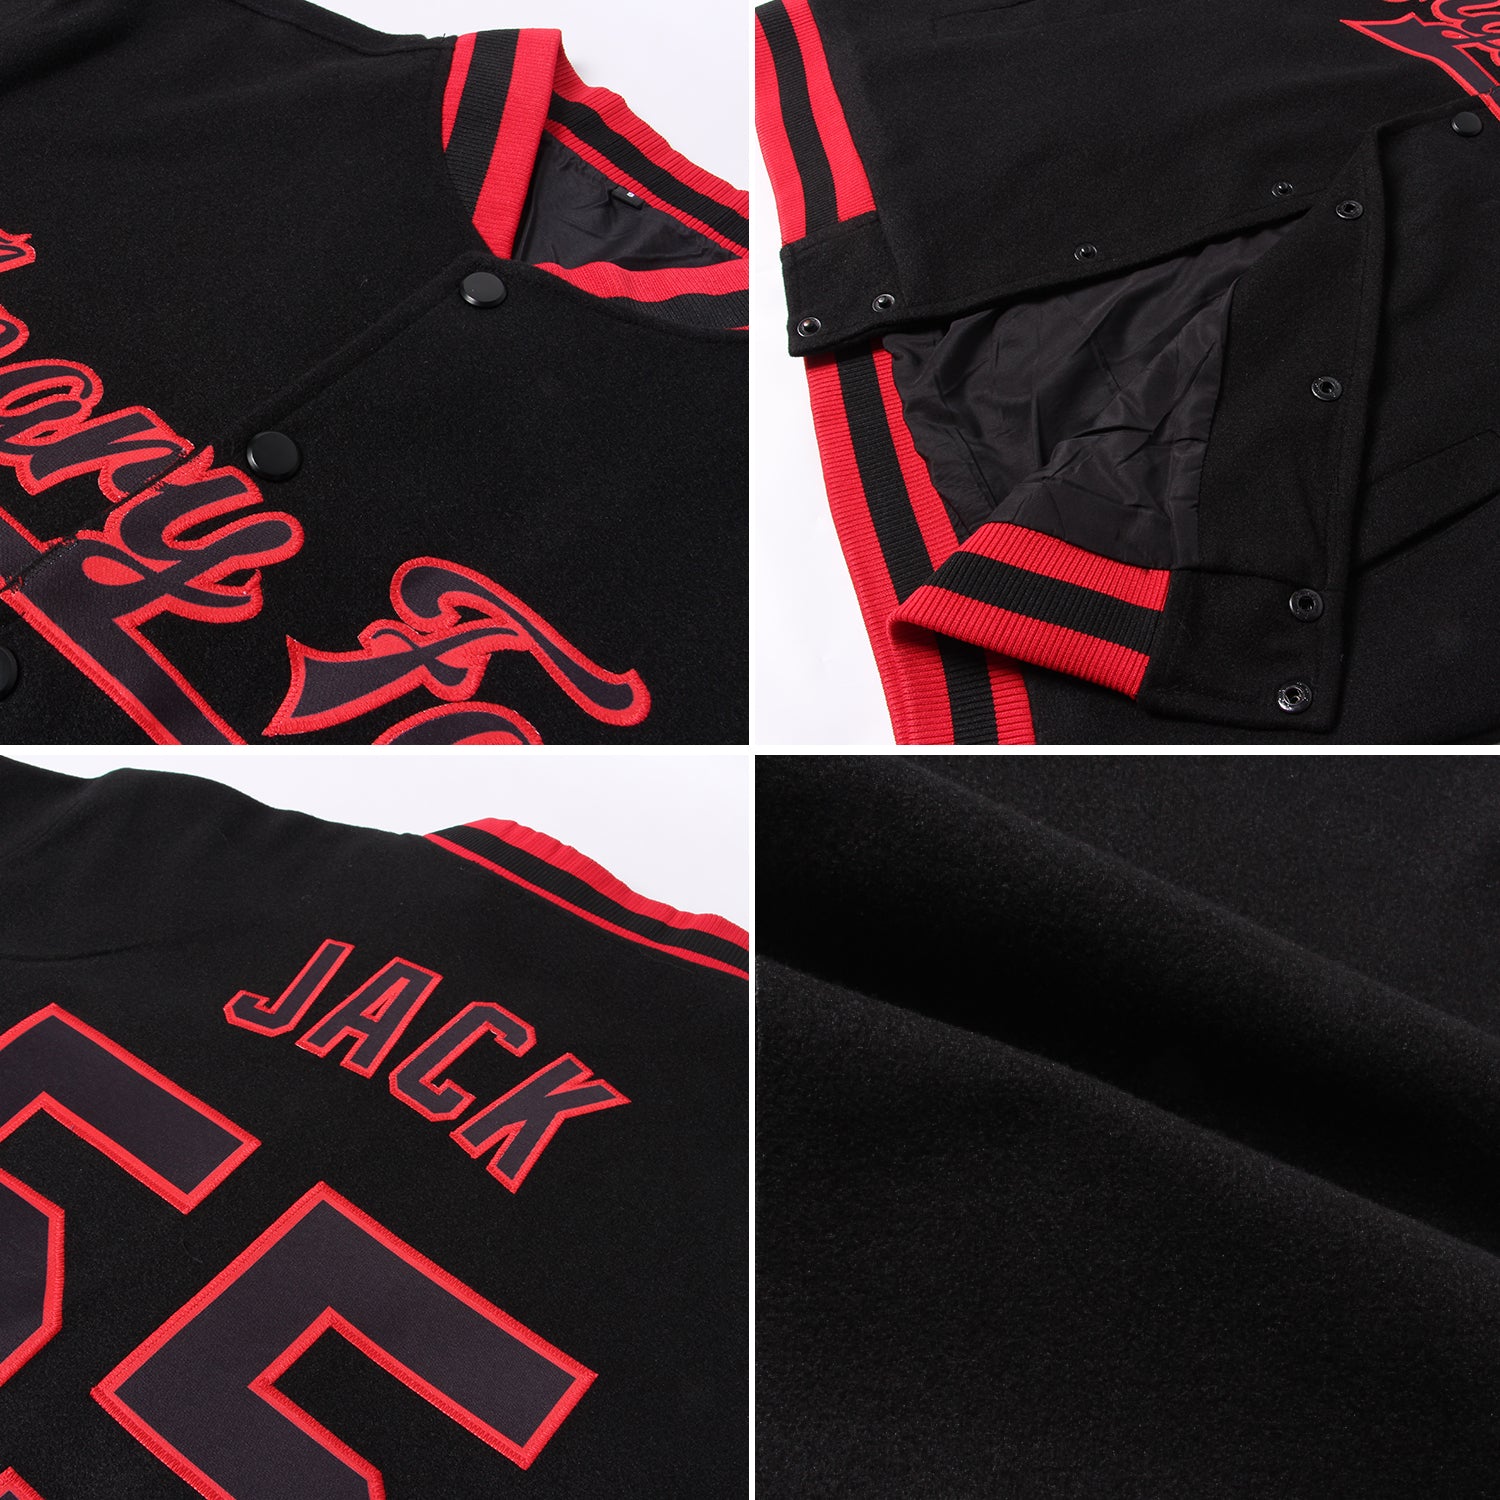 NBA Chicago Bulls Baseball Jacket + 3D Cap - BTF Store